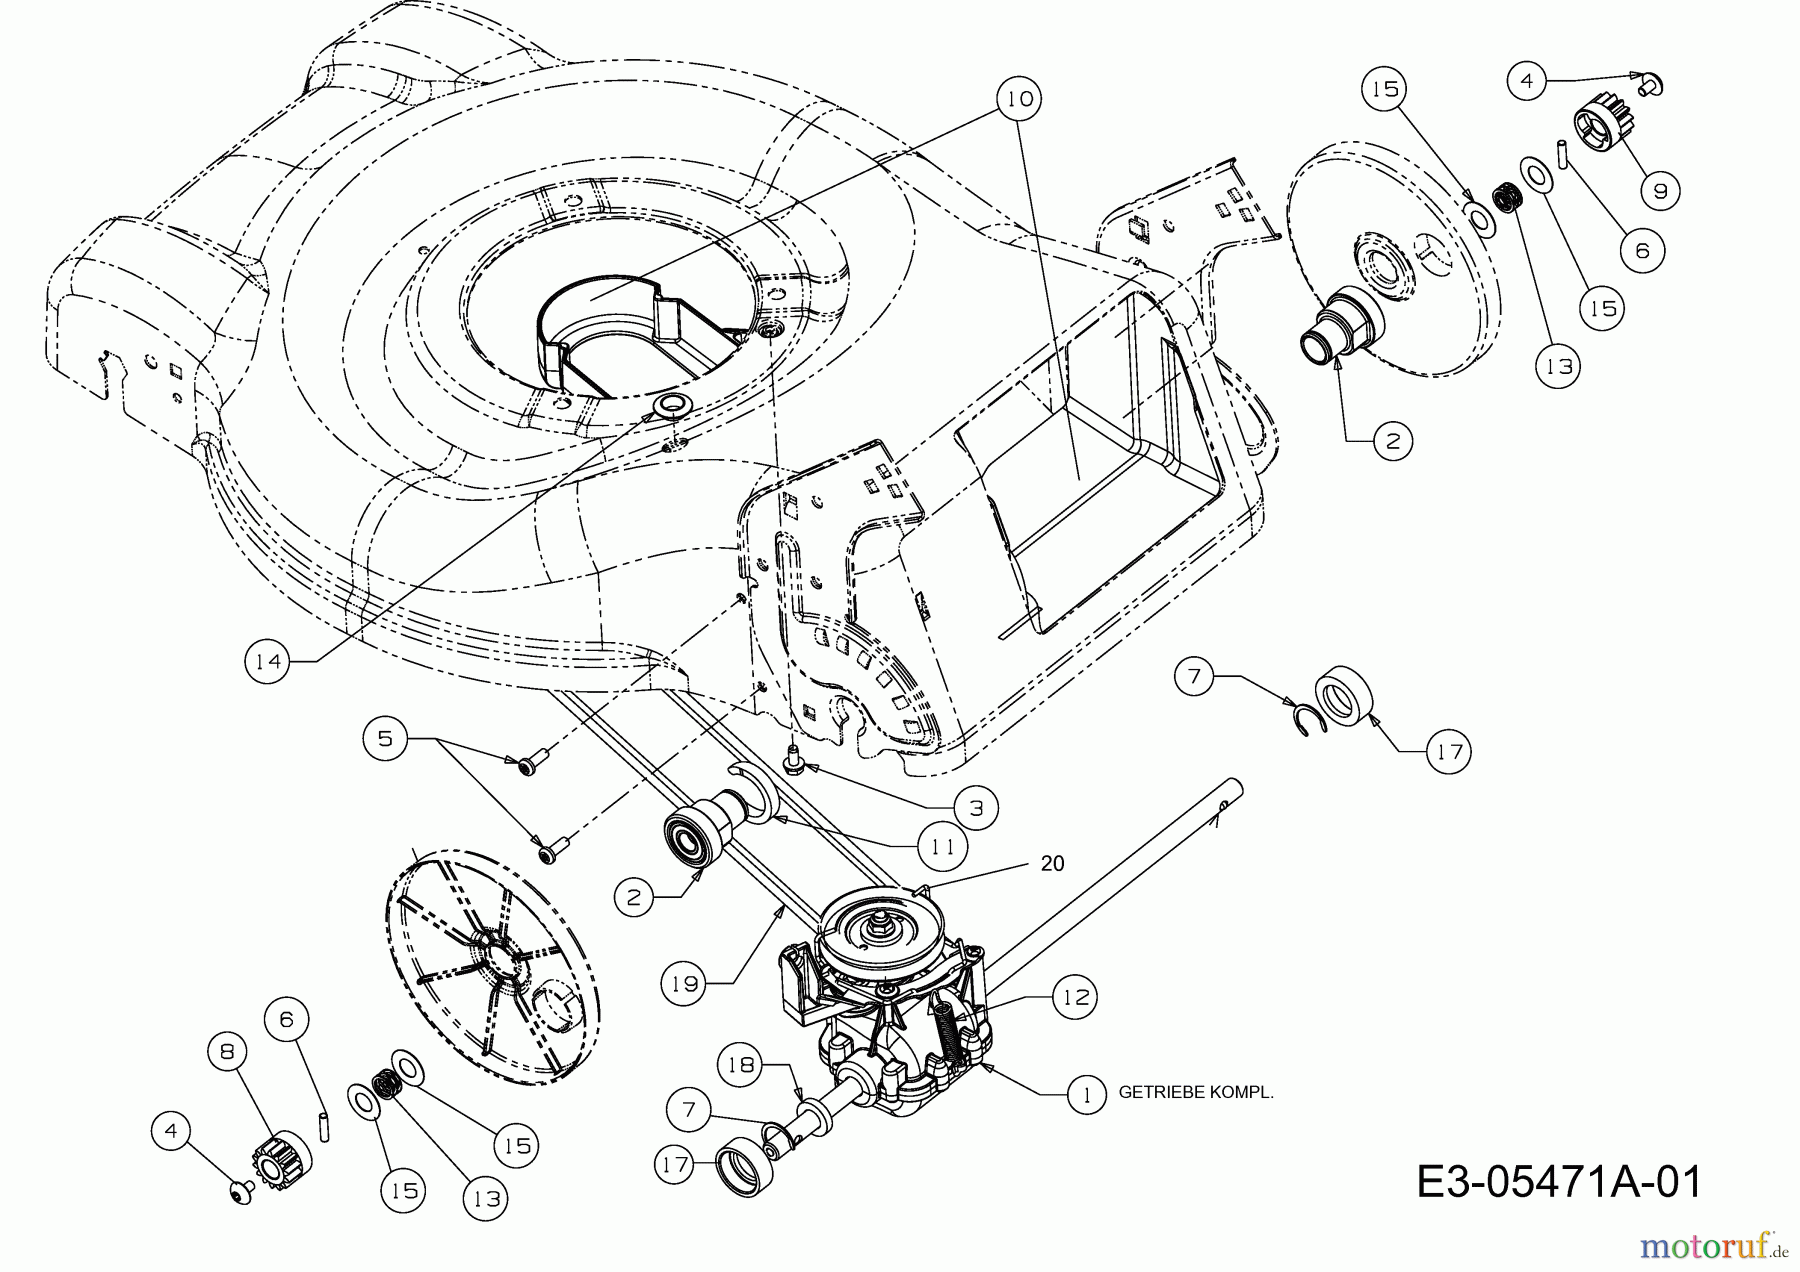  Cmi Motormäher mit Antrieb B 46 A 12D-J54H620  (2010) Getriebe